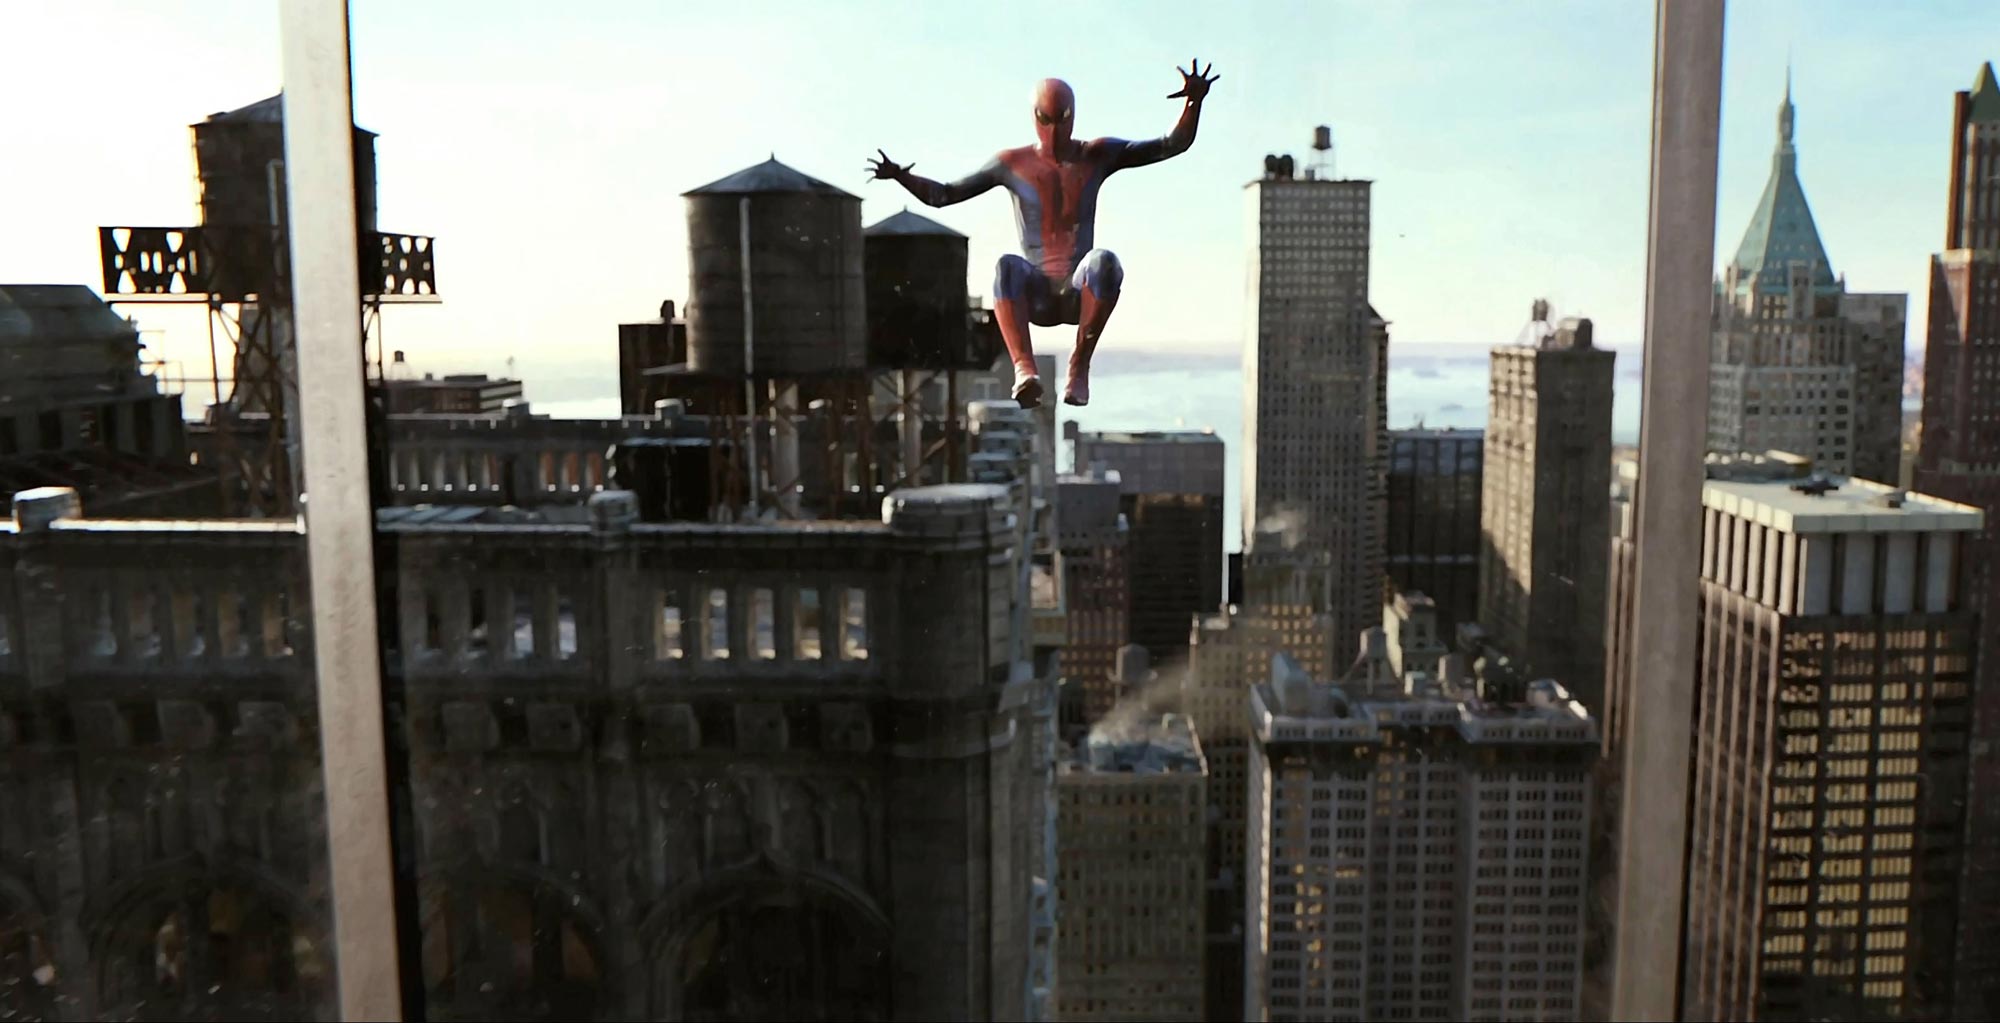 Ibarra sophie rain spiderman video проверь. Эндрю Гарфилд на небоскребе. Человек паук Эндрю на небоскребе. Человек паук на небоскребе. Удивительный человек-паук 2012.